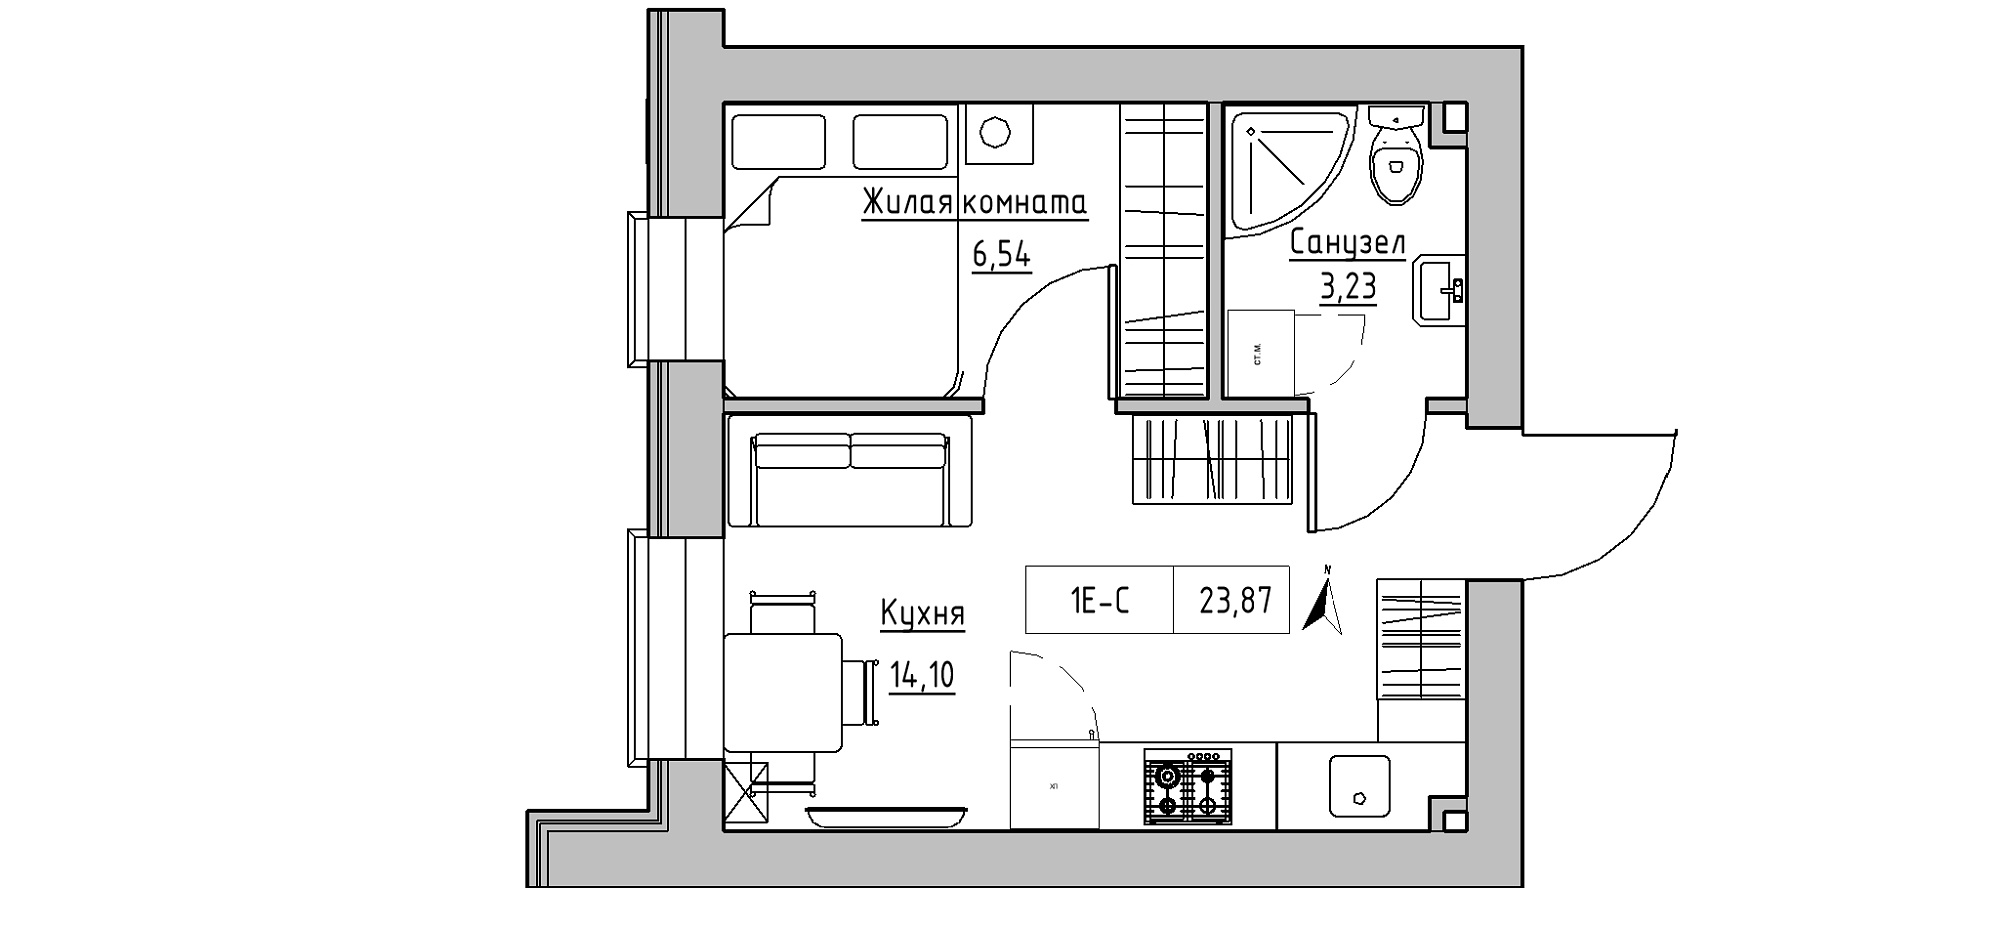 Planning 1-rm flats area 23.87m2, KS-020-05/0015.